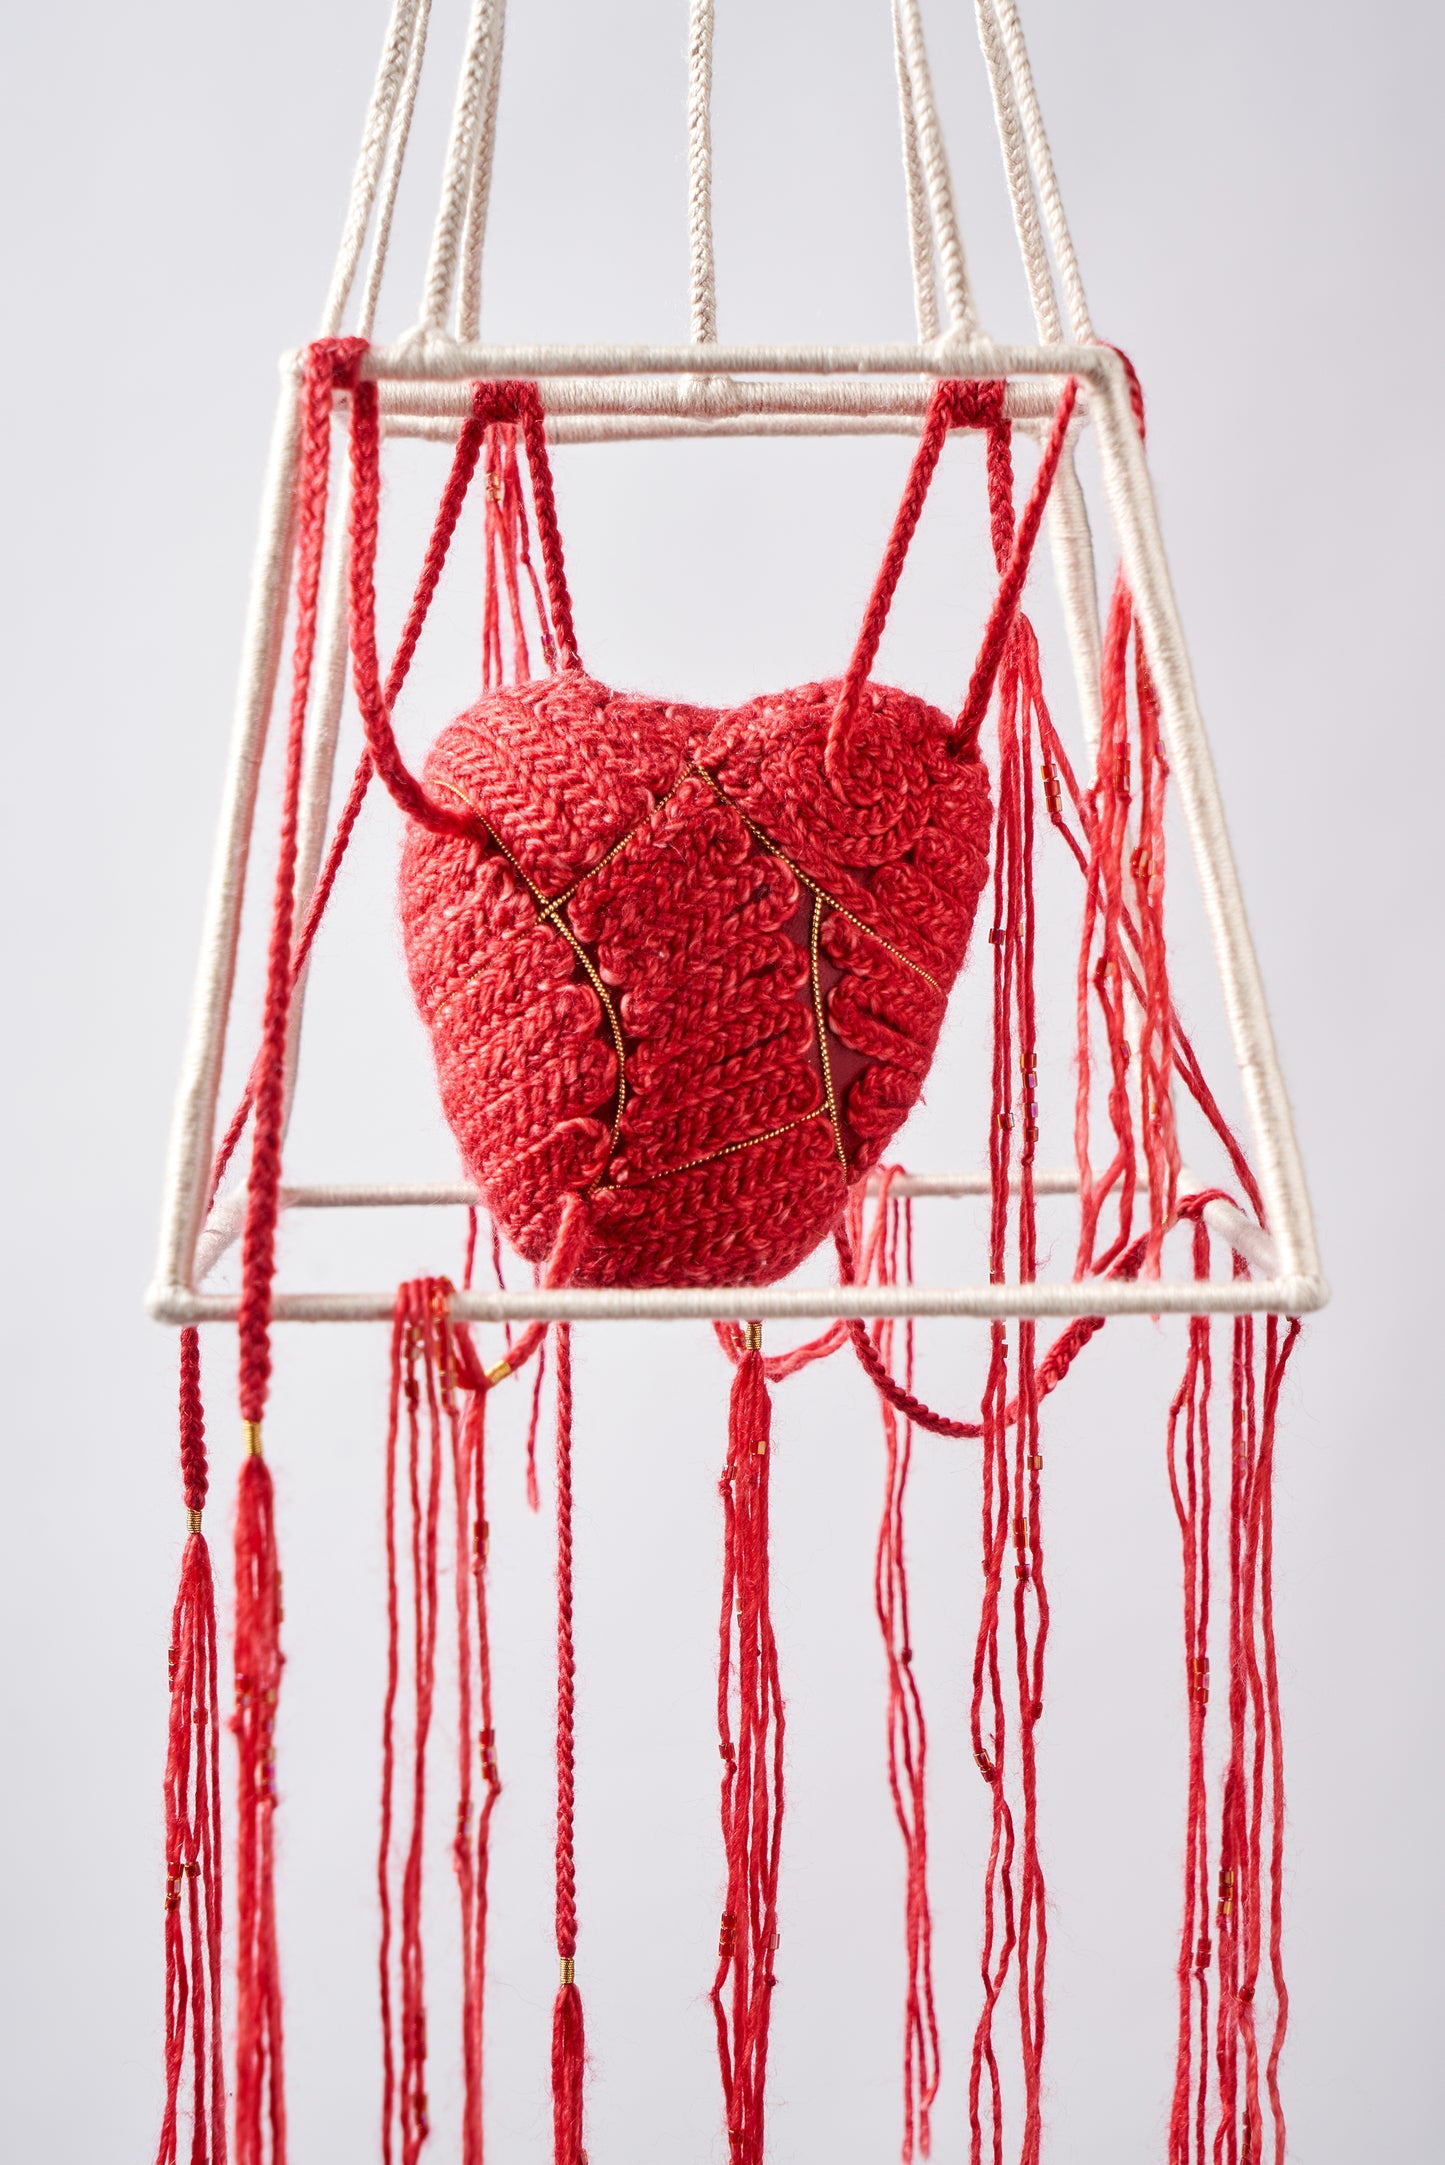 The Heart-Shaped Box par Cinthya Chalifoux